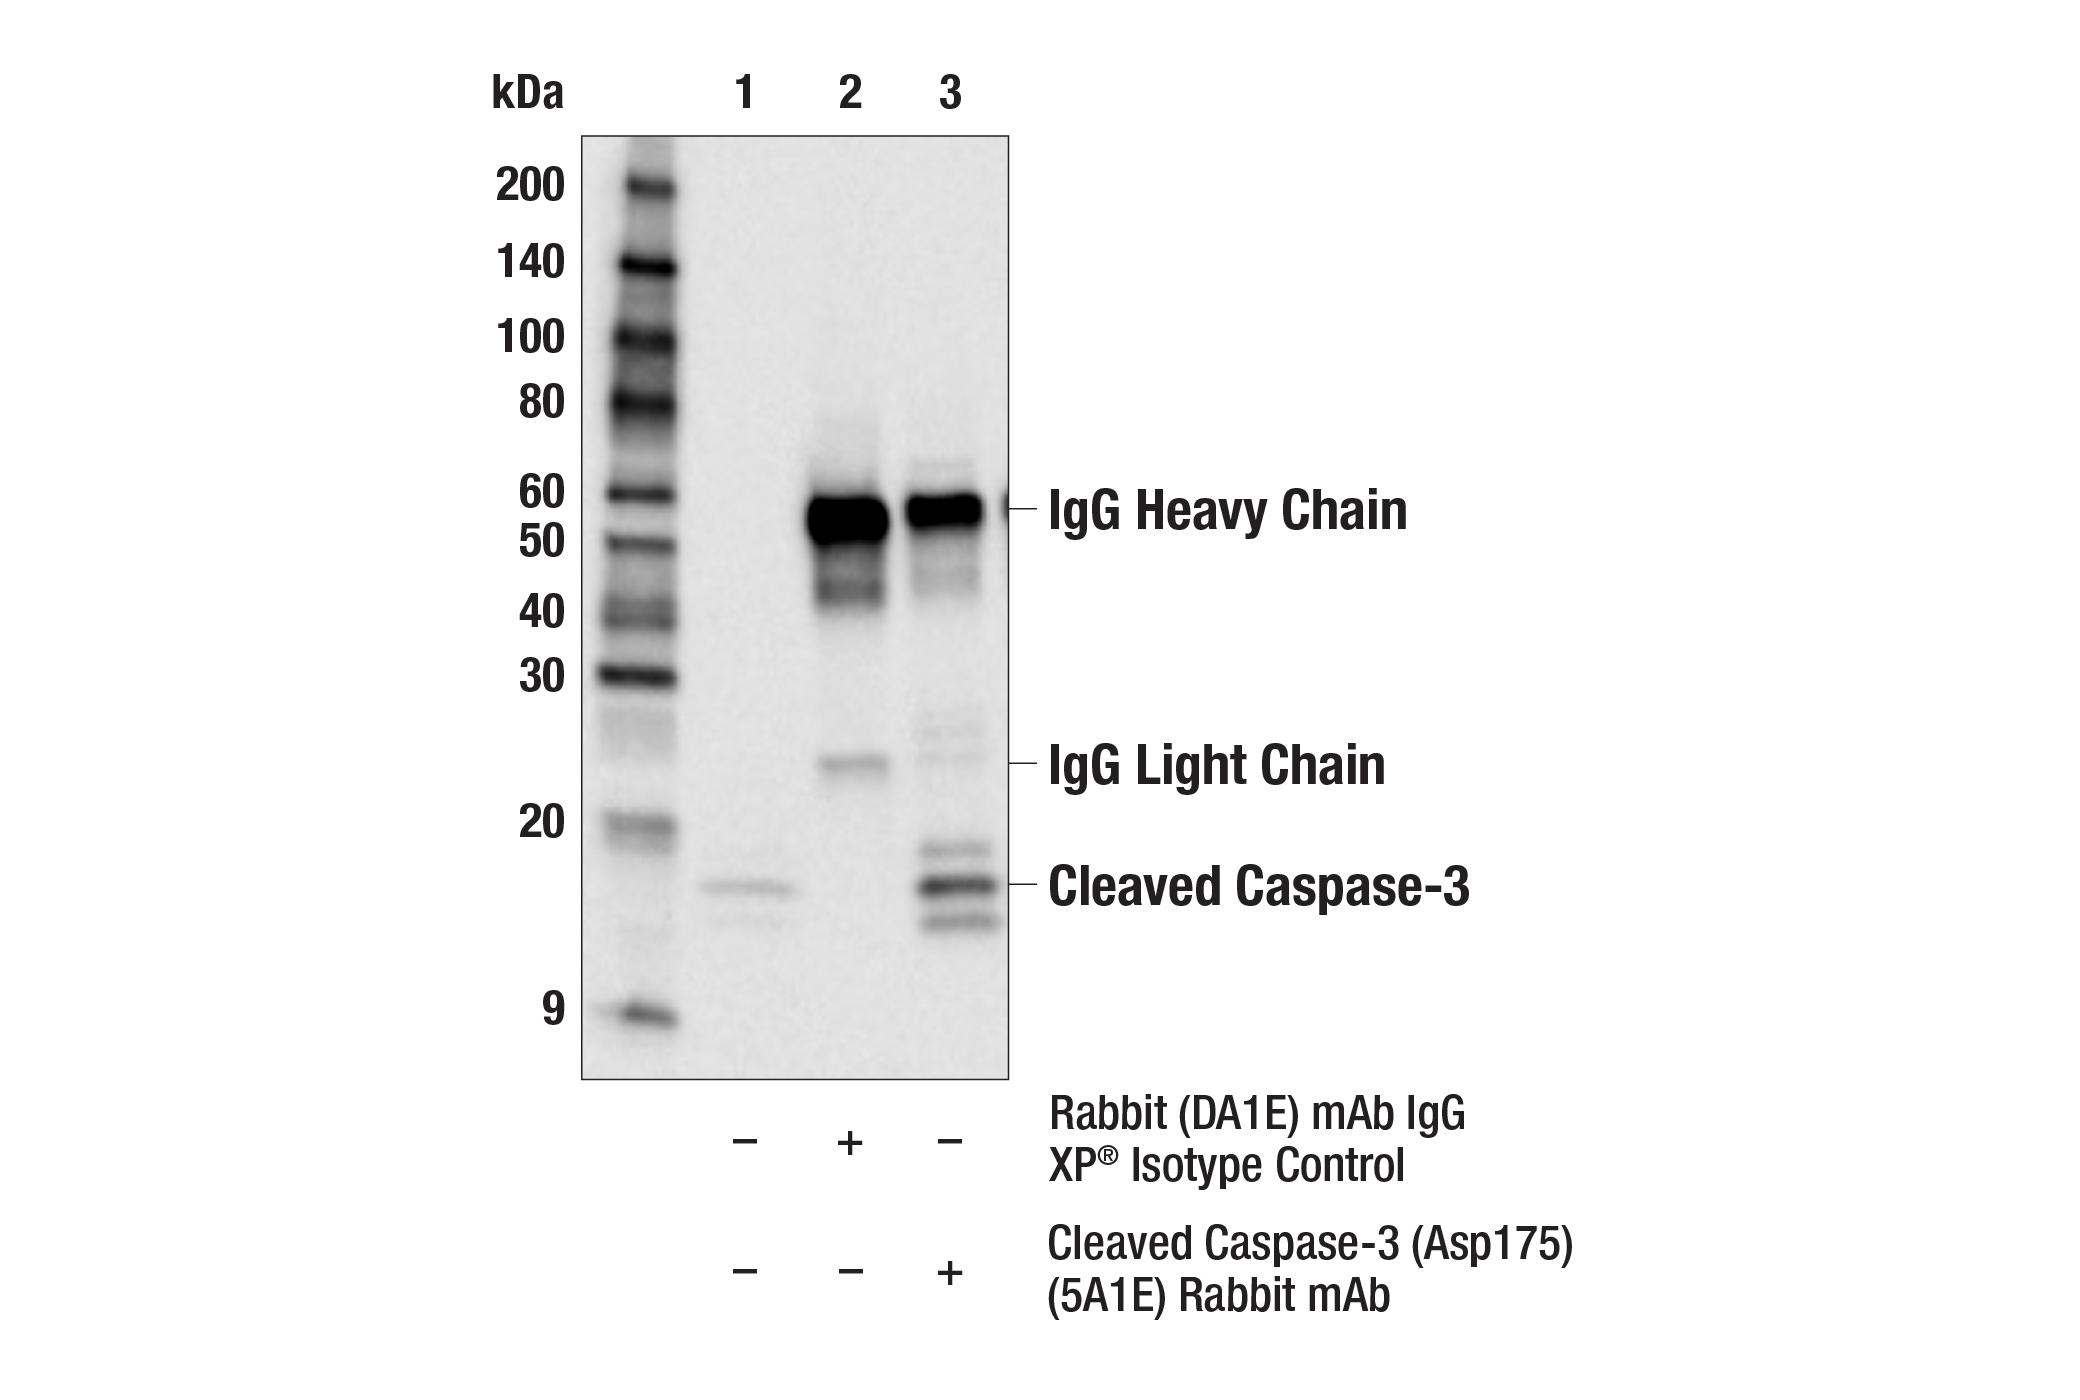  Image 9: Apoptosis Marker: Cleaved Caspase-3 (Asp175) Western Detection Kit